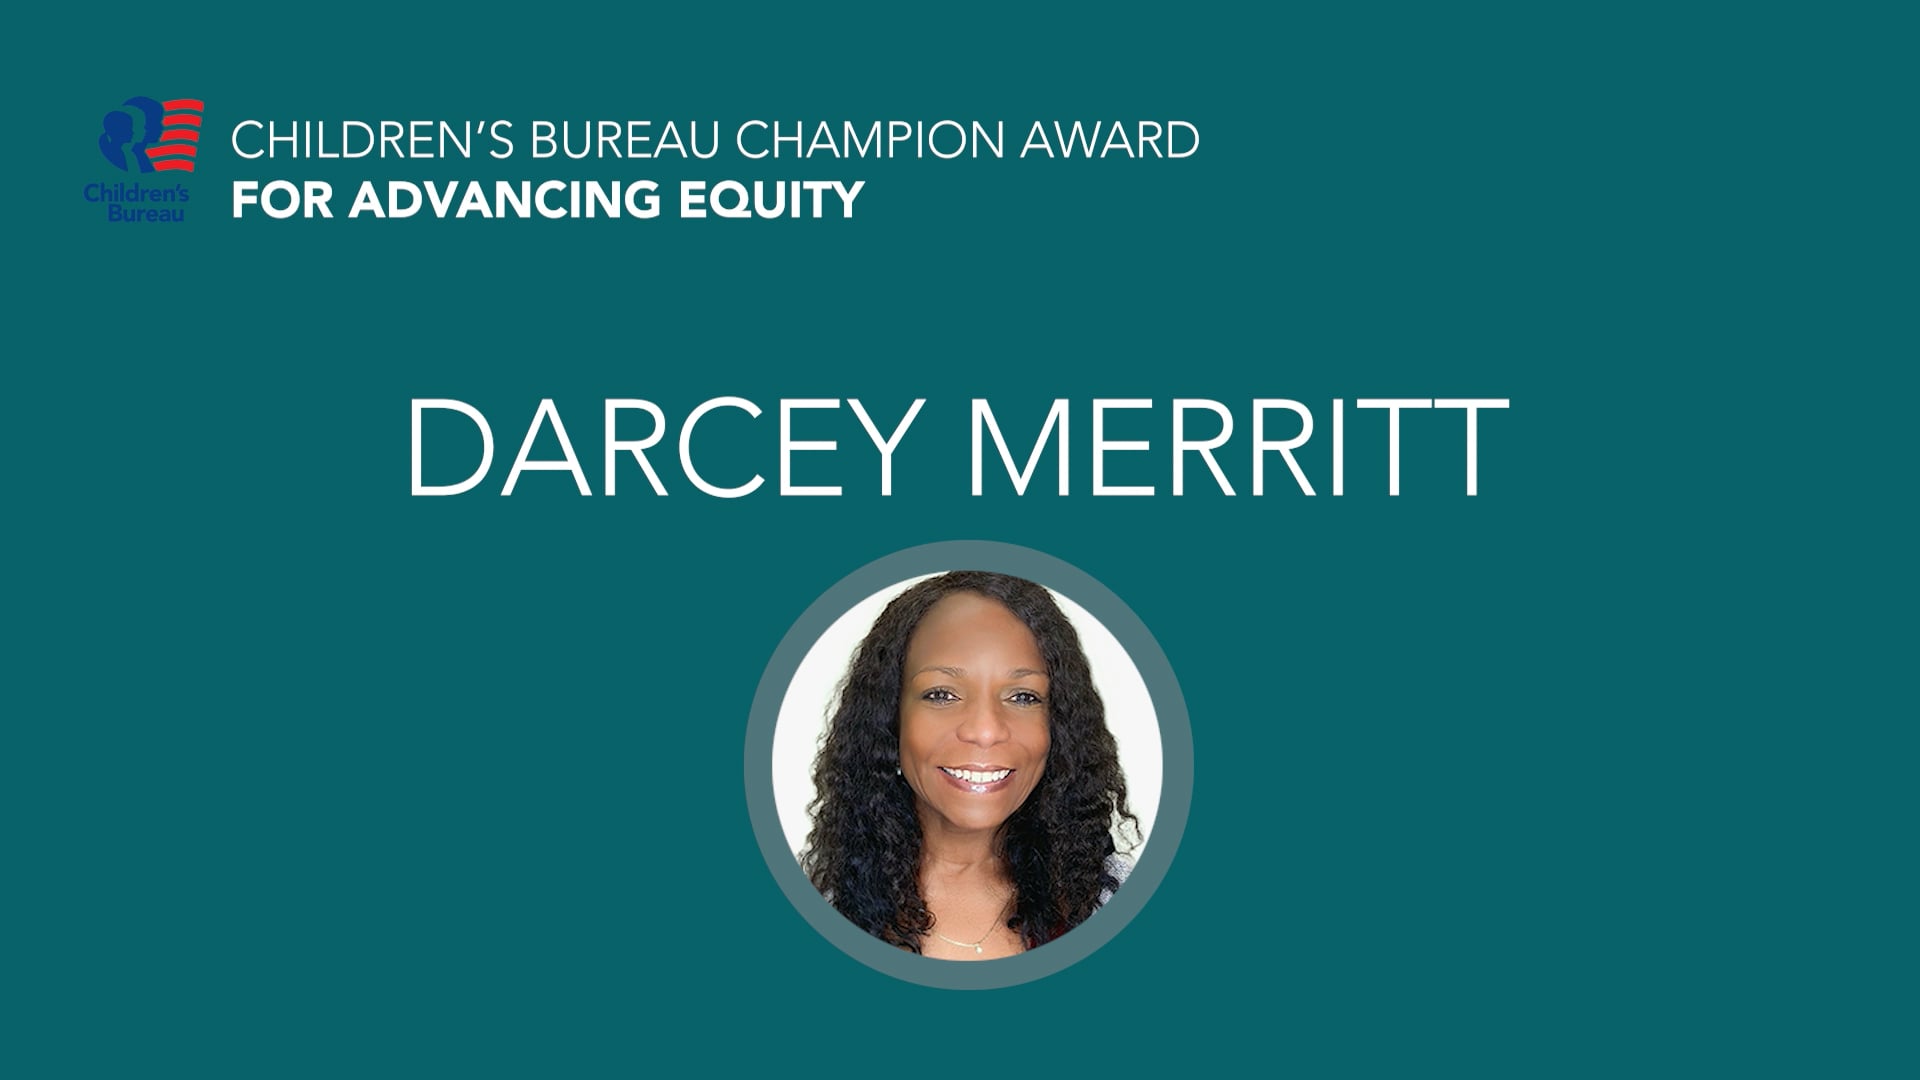 Click to watch the Darcey Merritt video